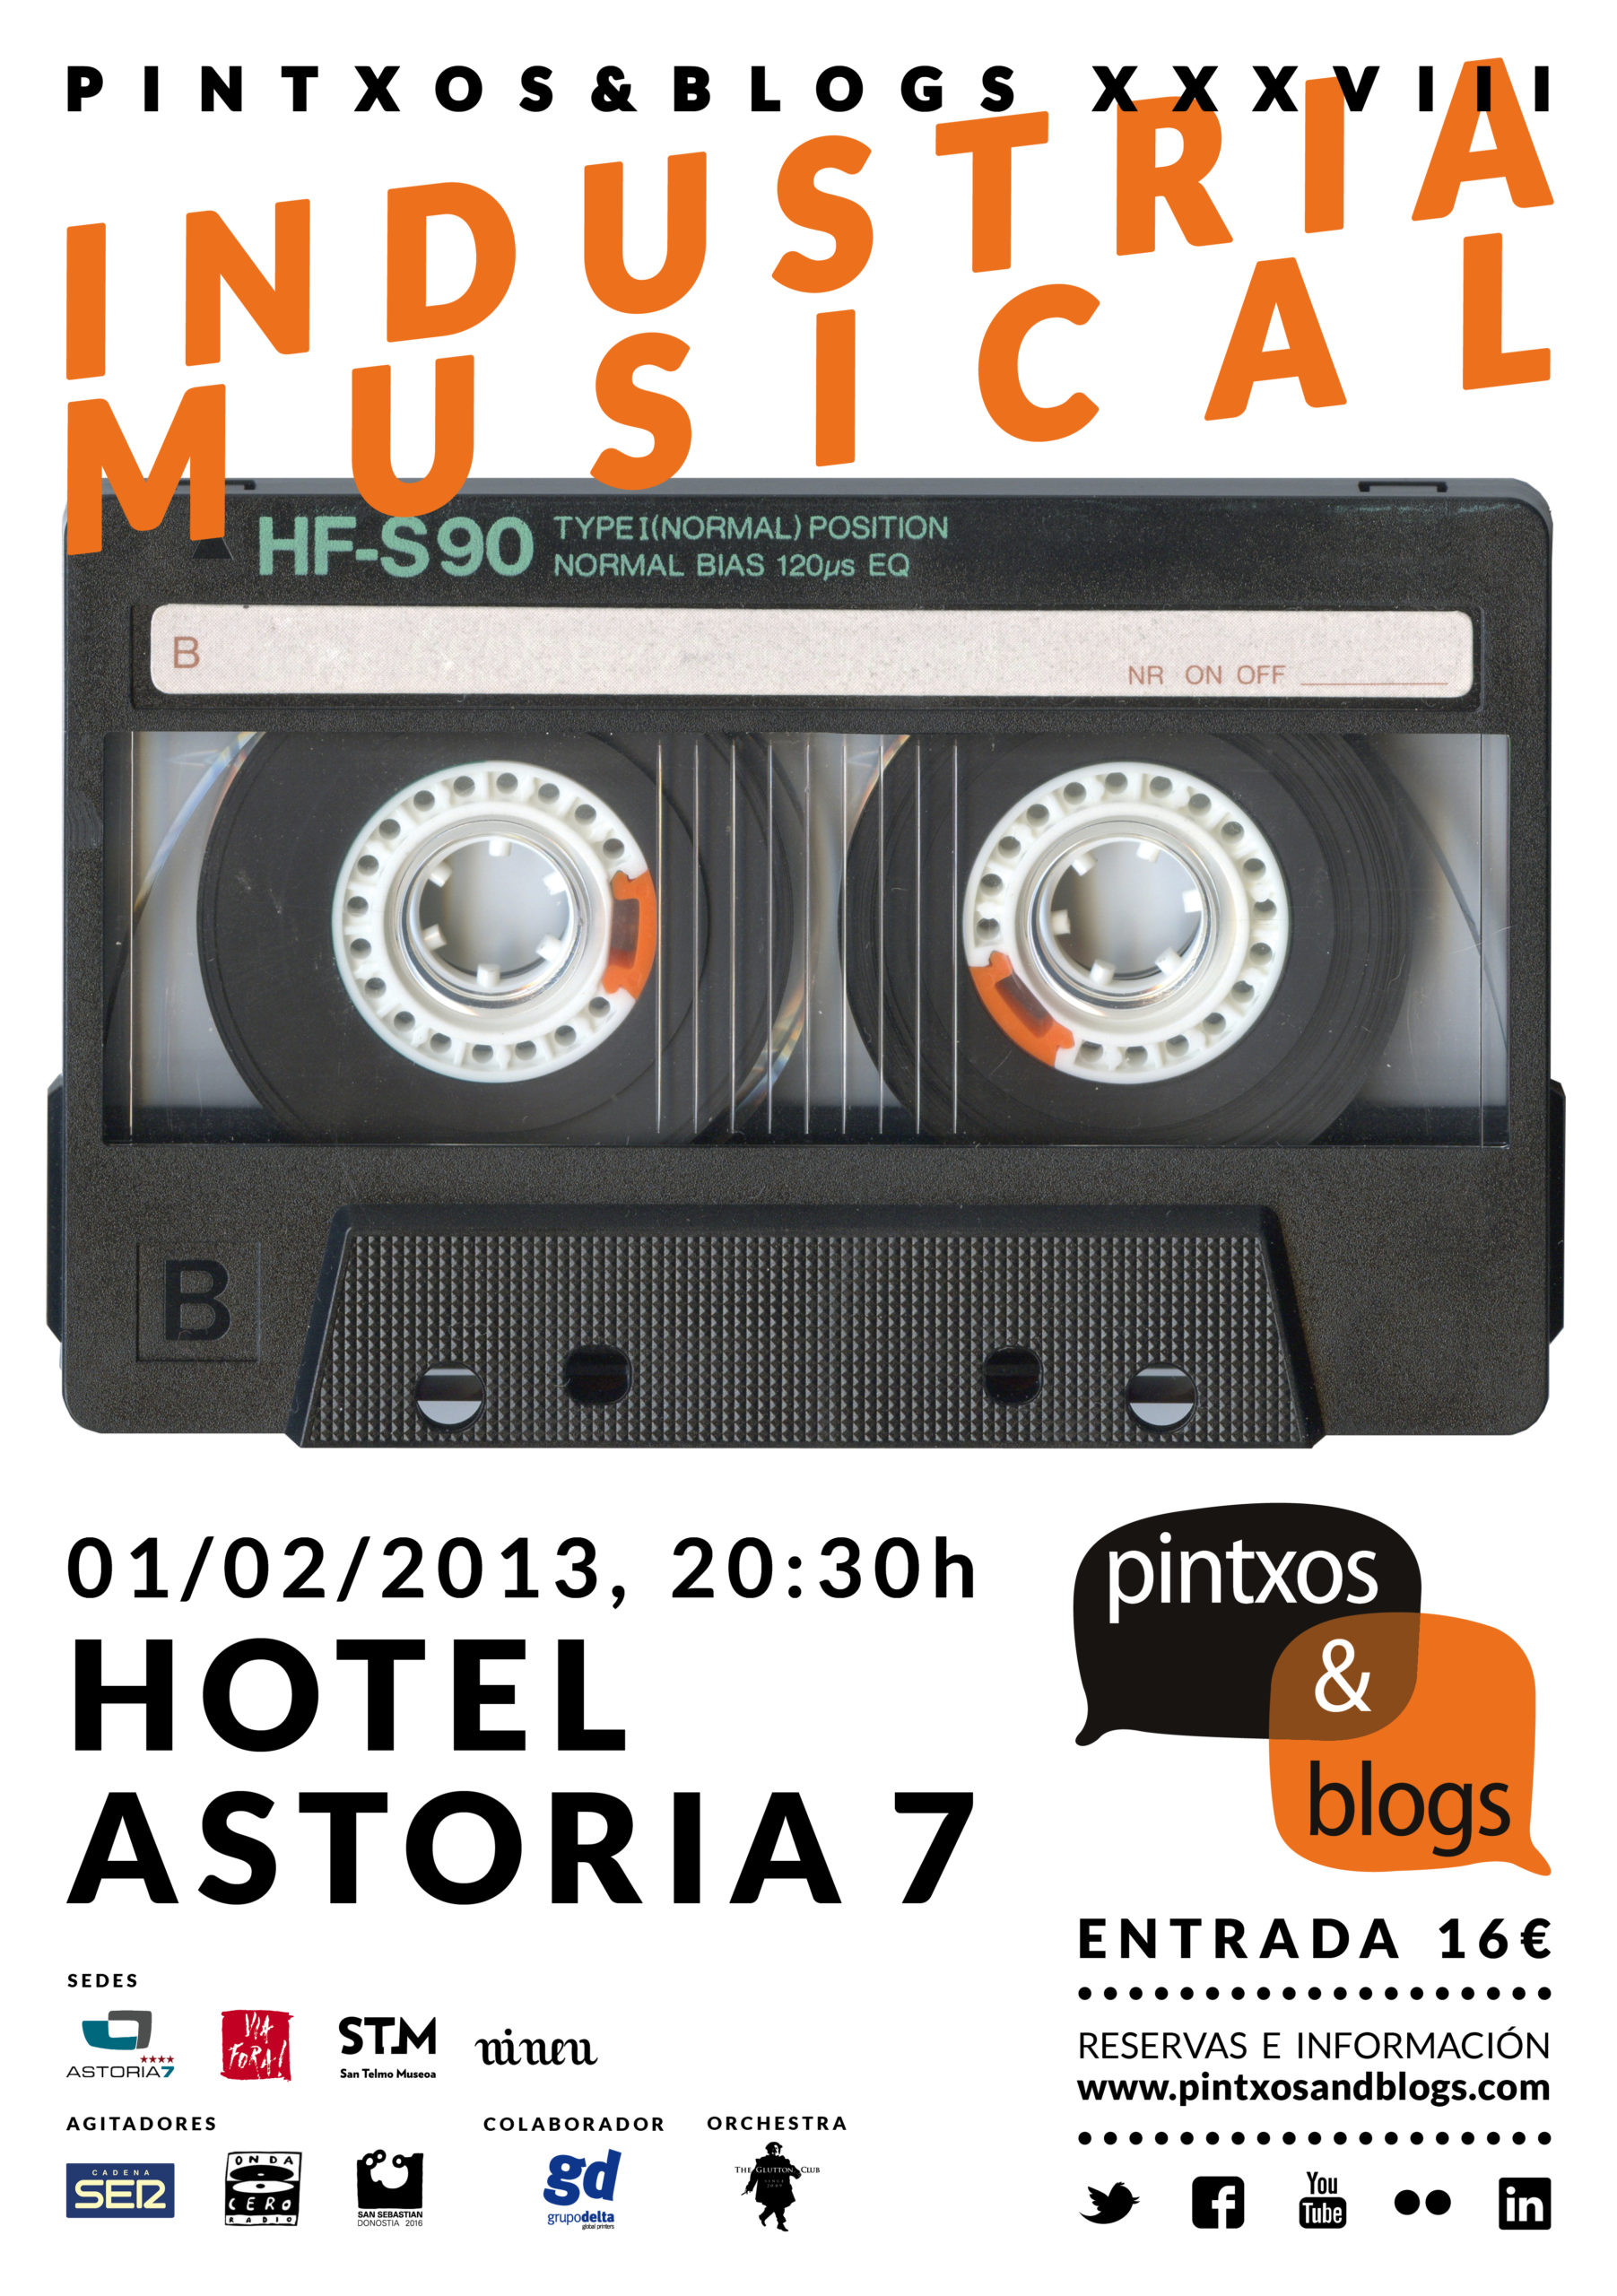 Pintxos&Blogs XXXVIII. Industria musical. 2013.02.01, Hotel Astoria7